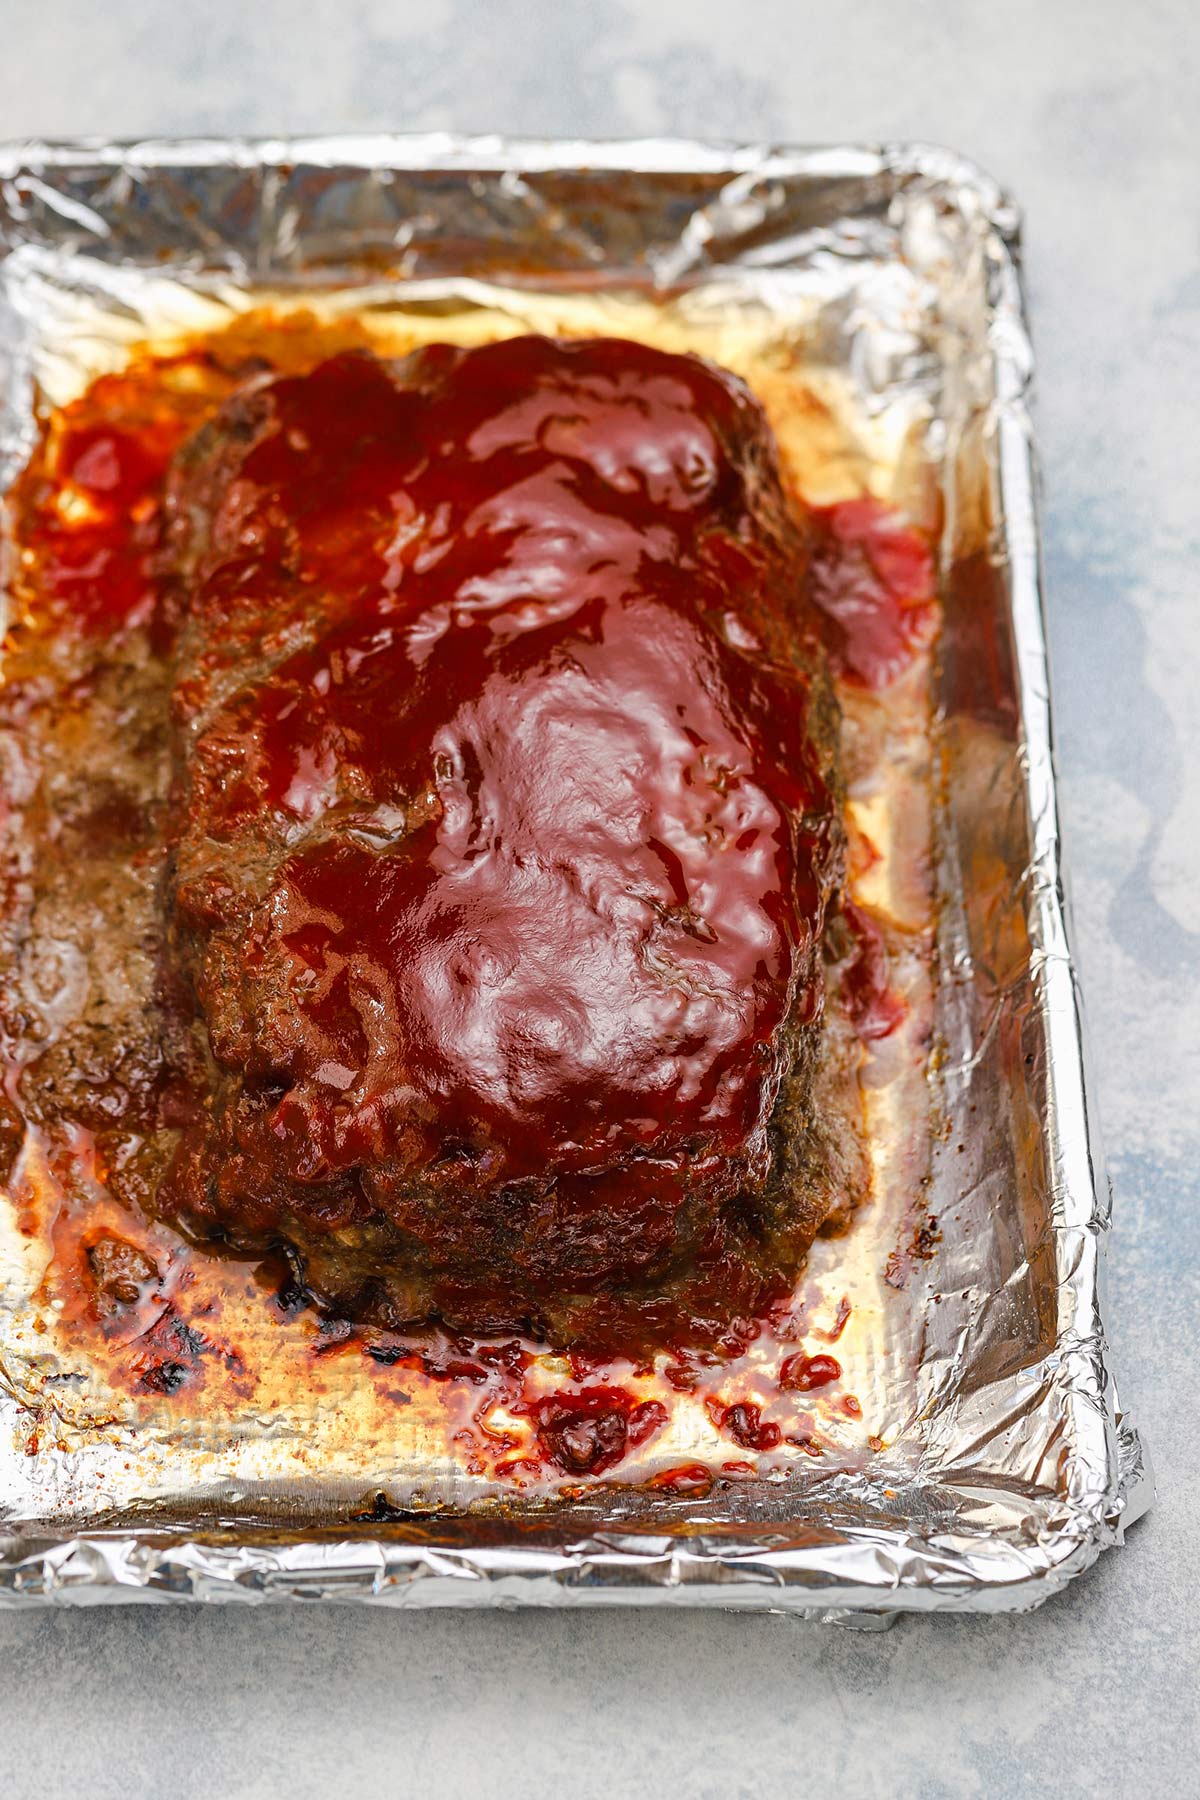 Overhead image of meatloaf after baking on an aluminum foil lined baking sheet.